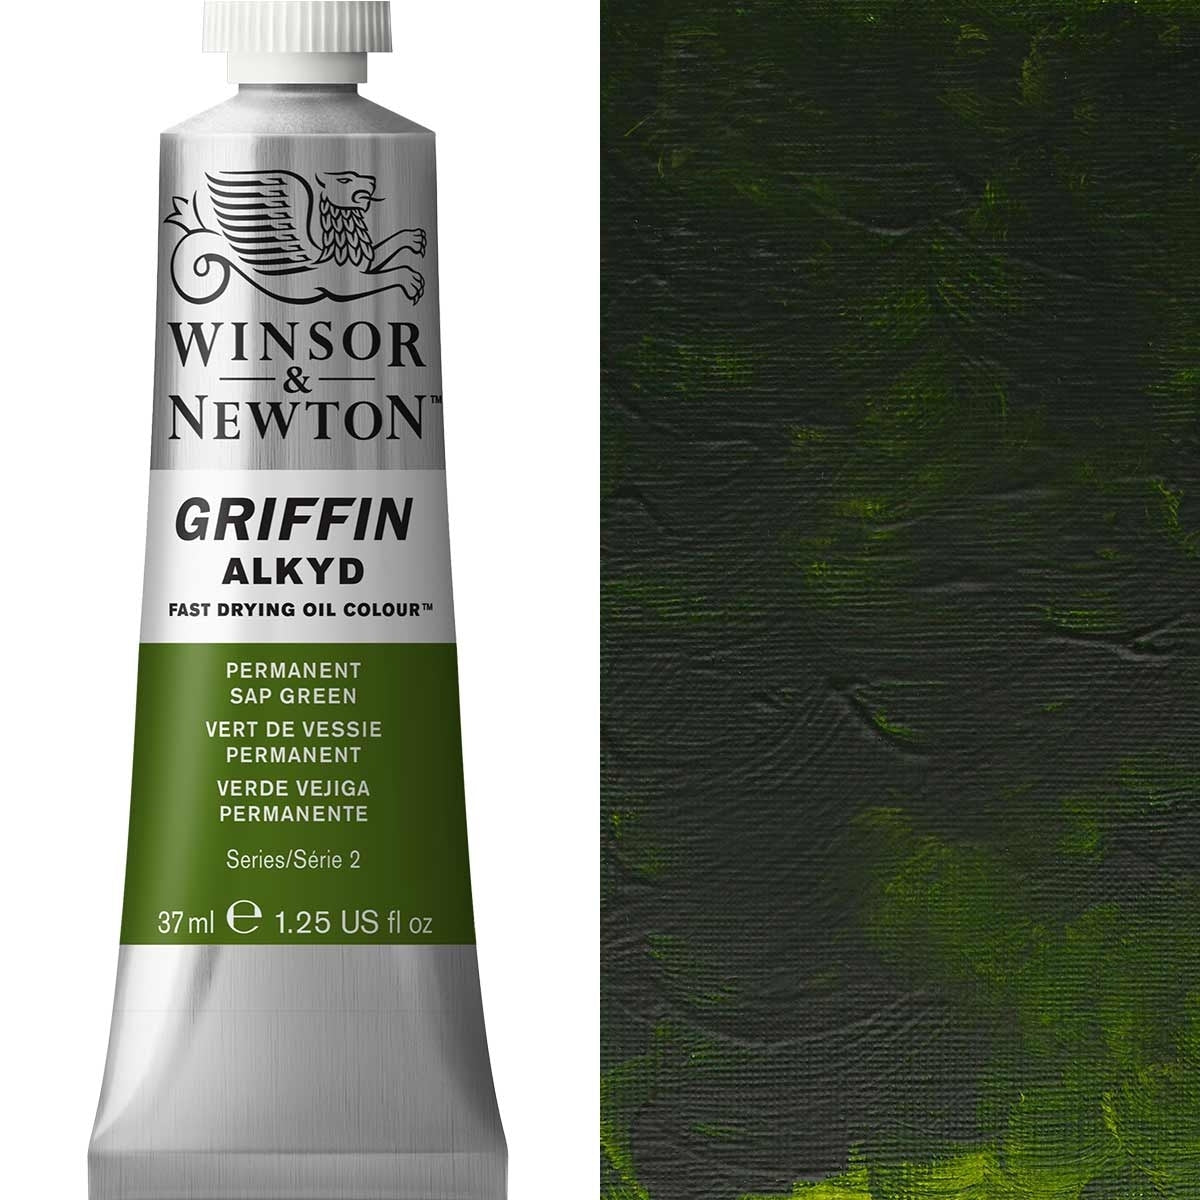 Winsor et Newton - Griffin Alkyd Oil Color - 37 ml - Green SAP permanent